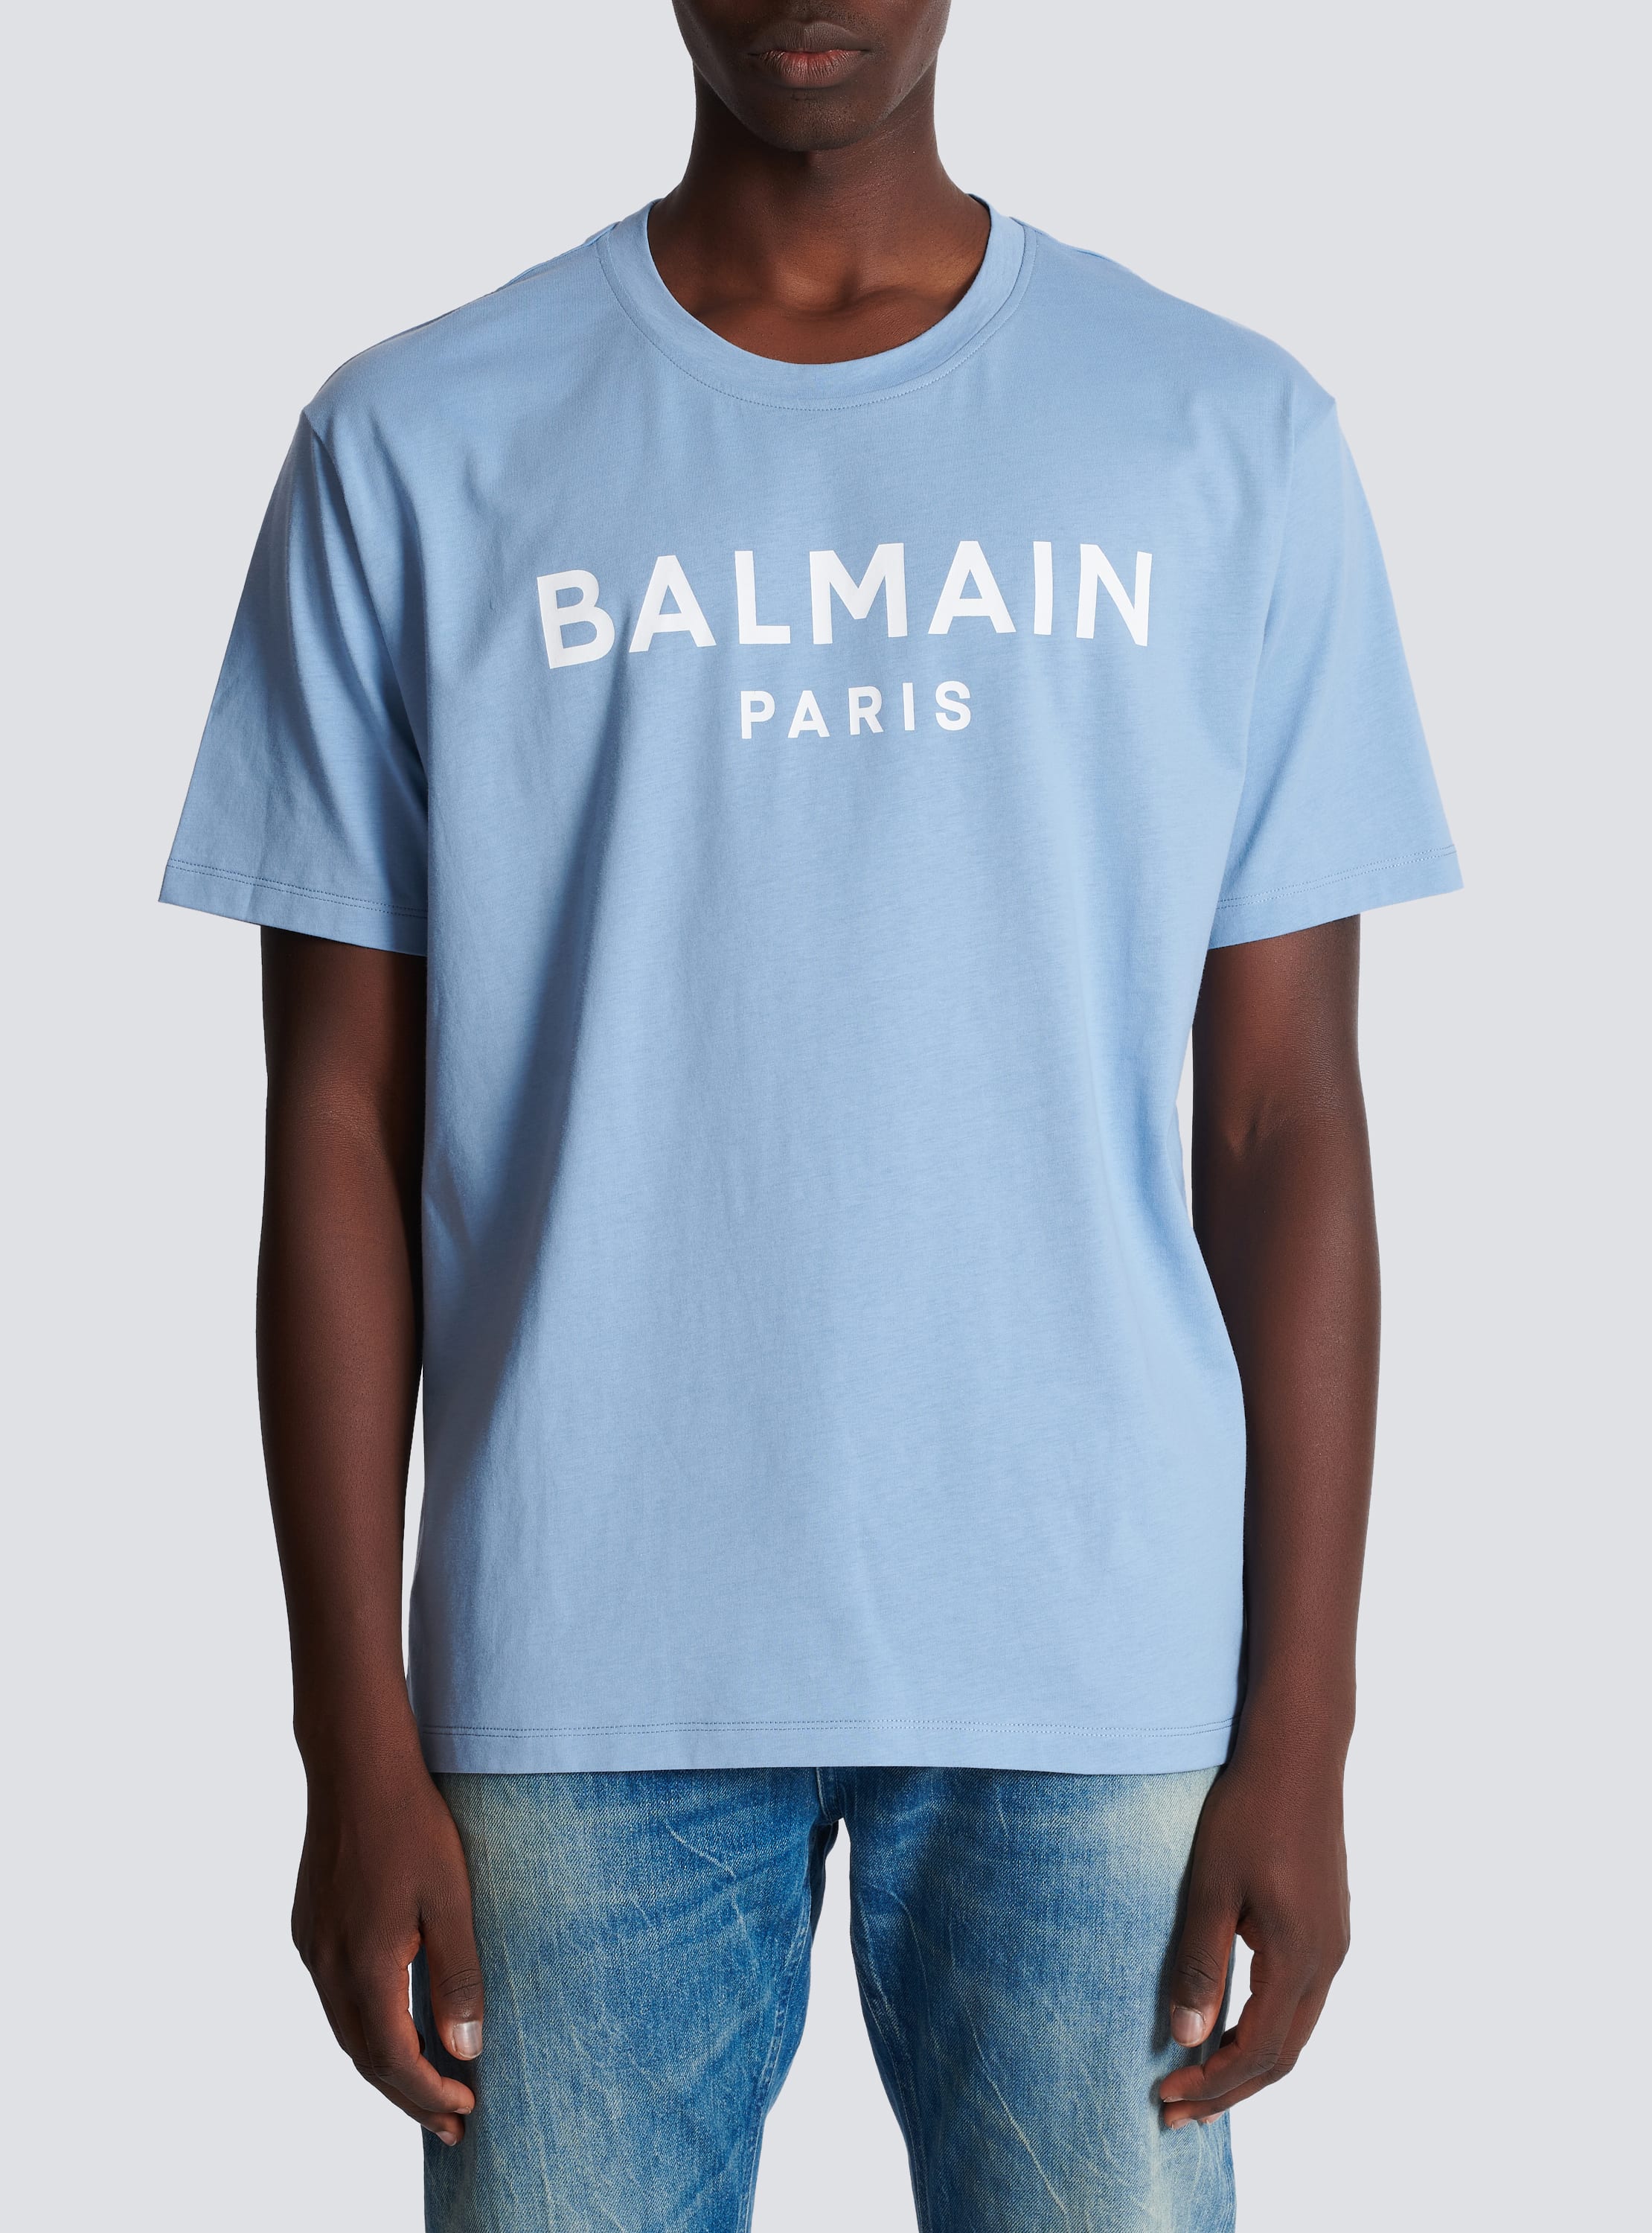 Balmain Paris Tシャツ - Men | BALMAIN